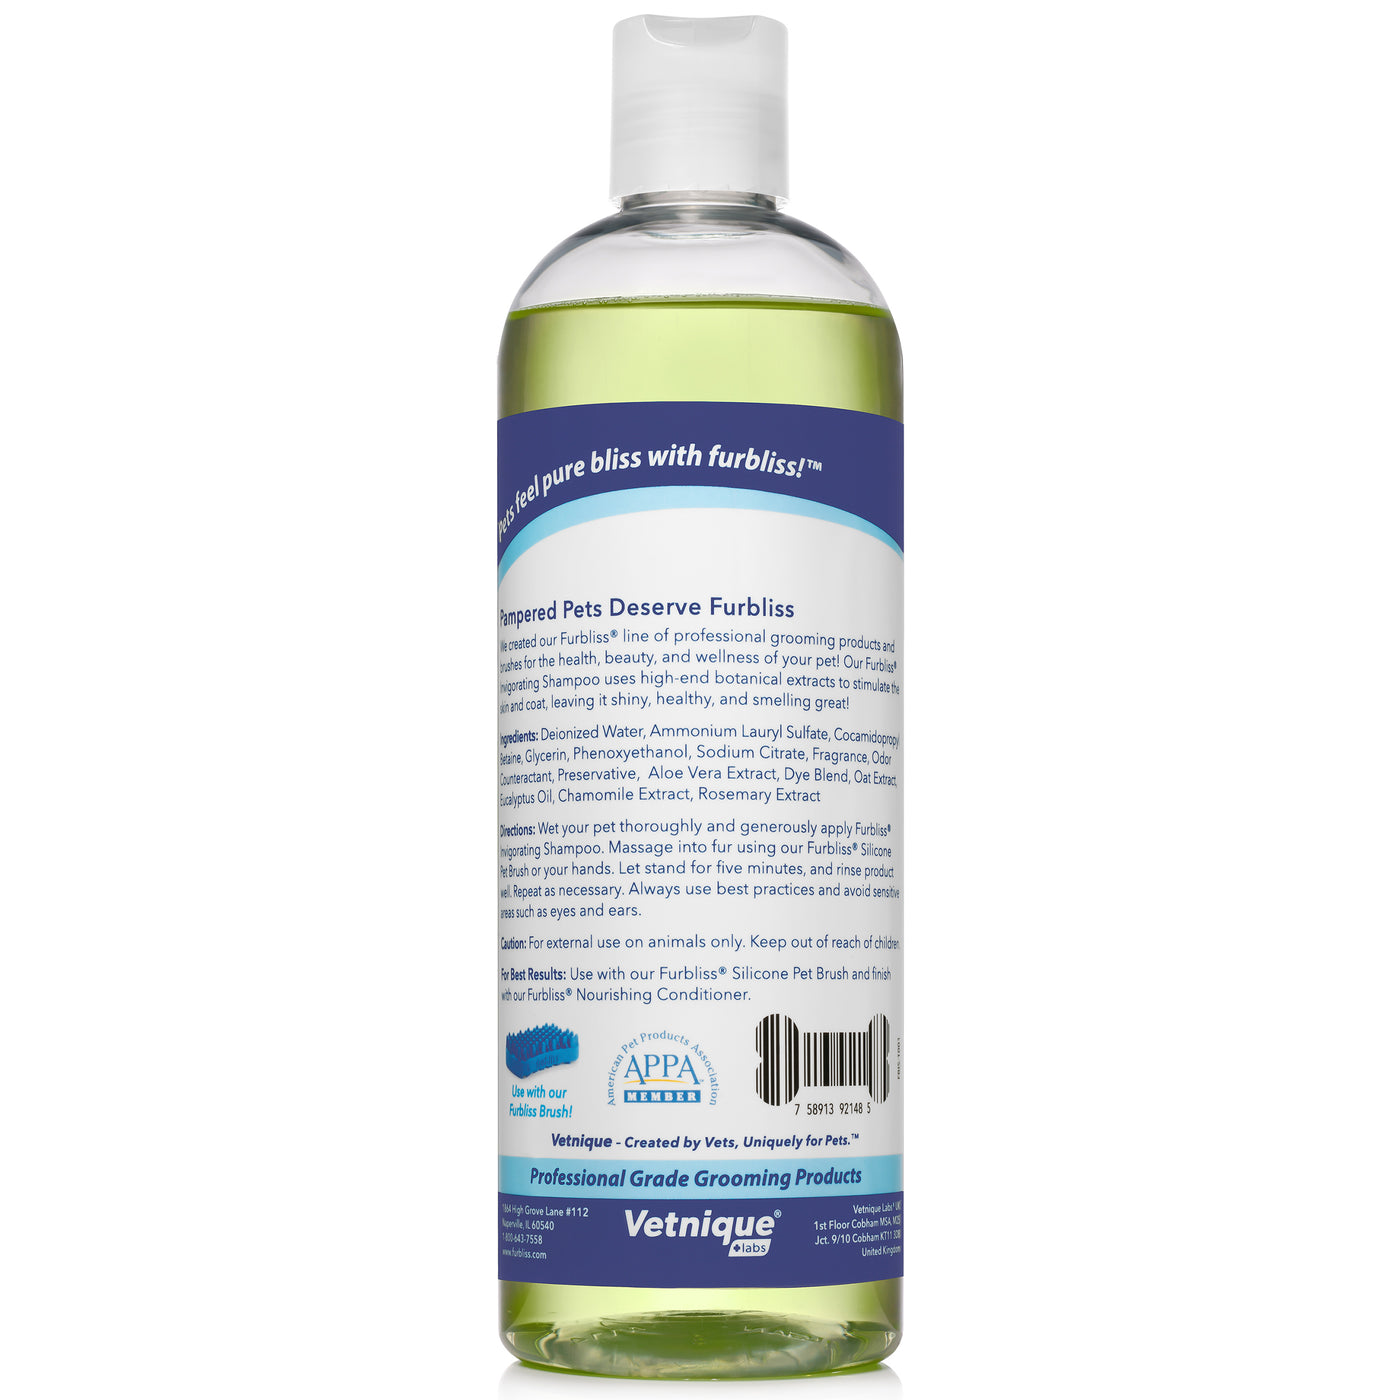 Furbliss® Green Brush & Invigorating Shampoo Bundle - Save 15%!